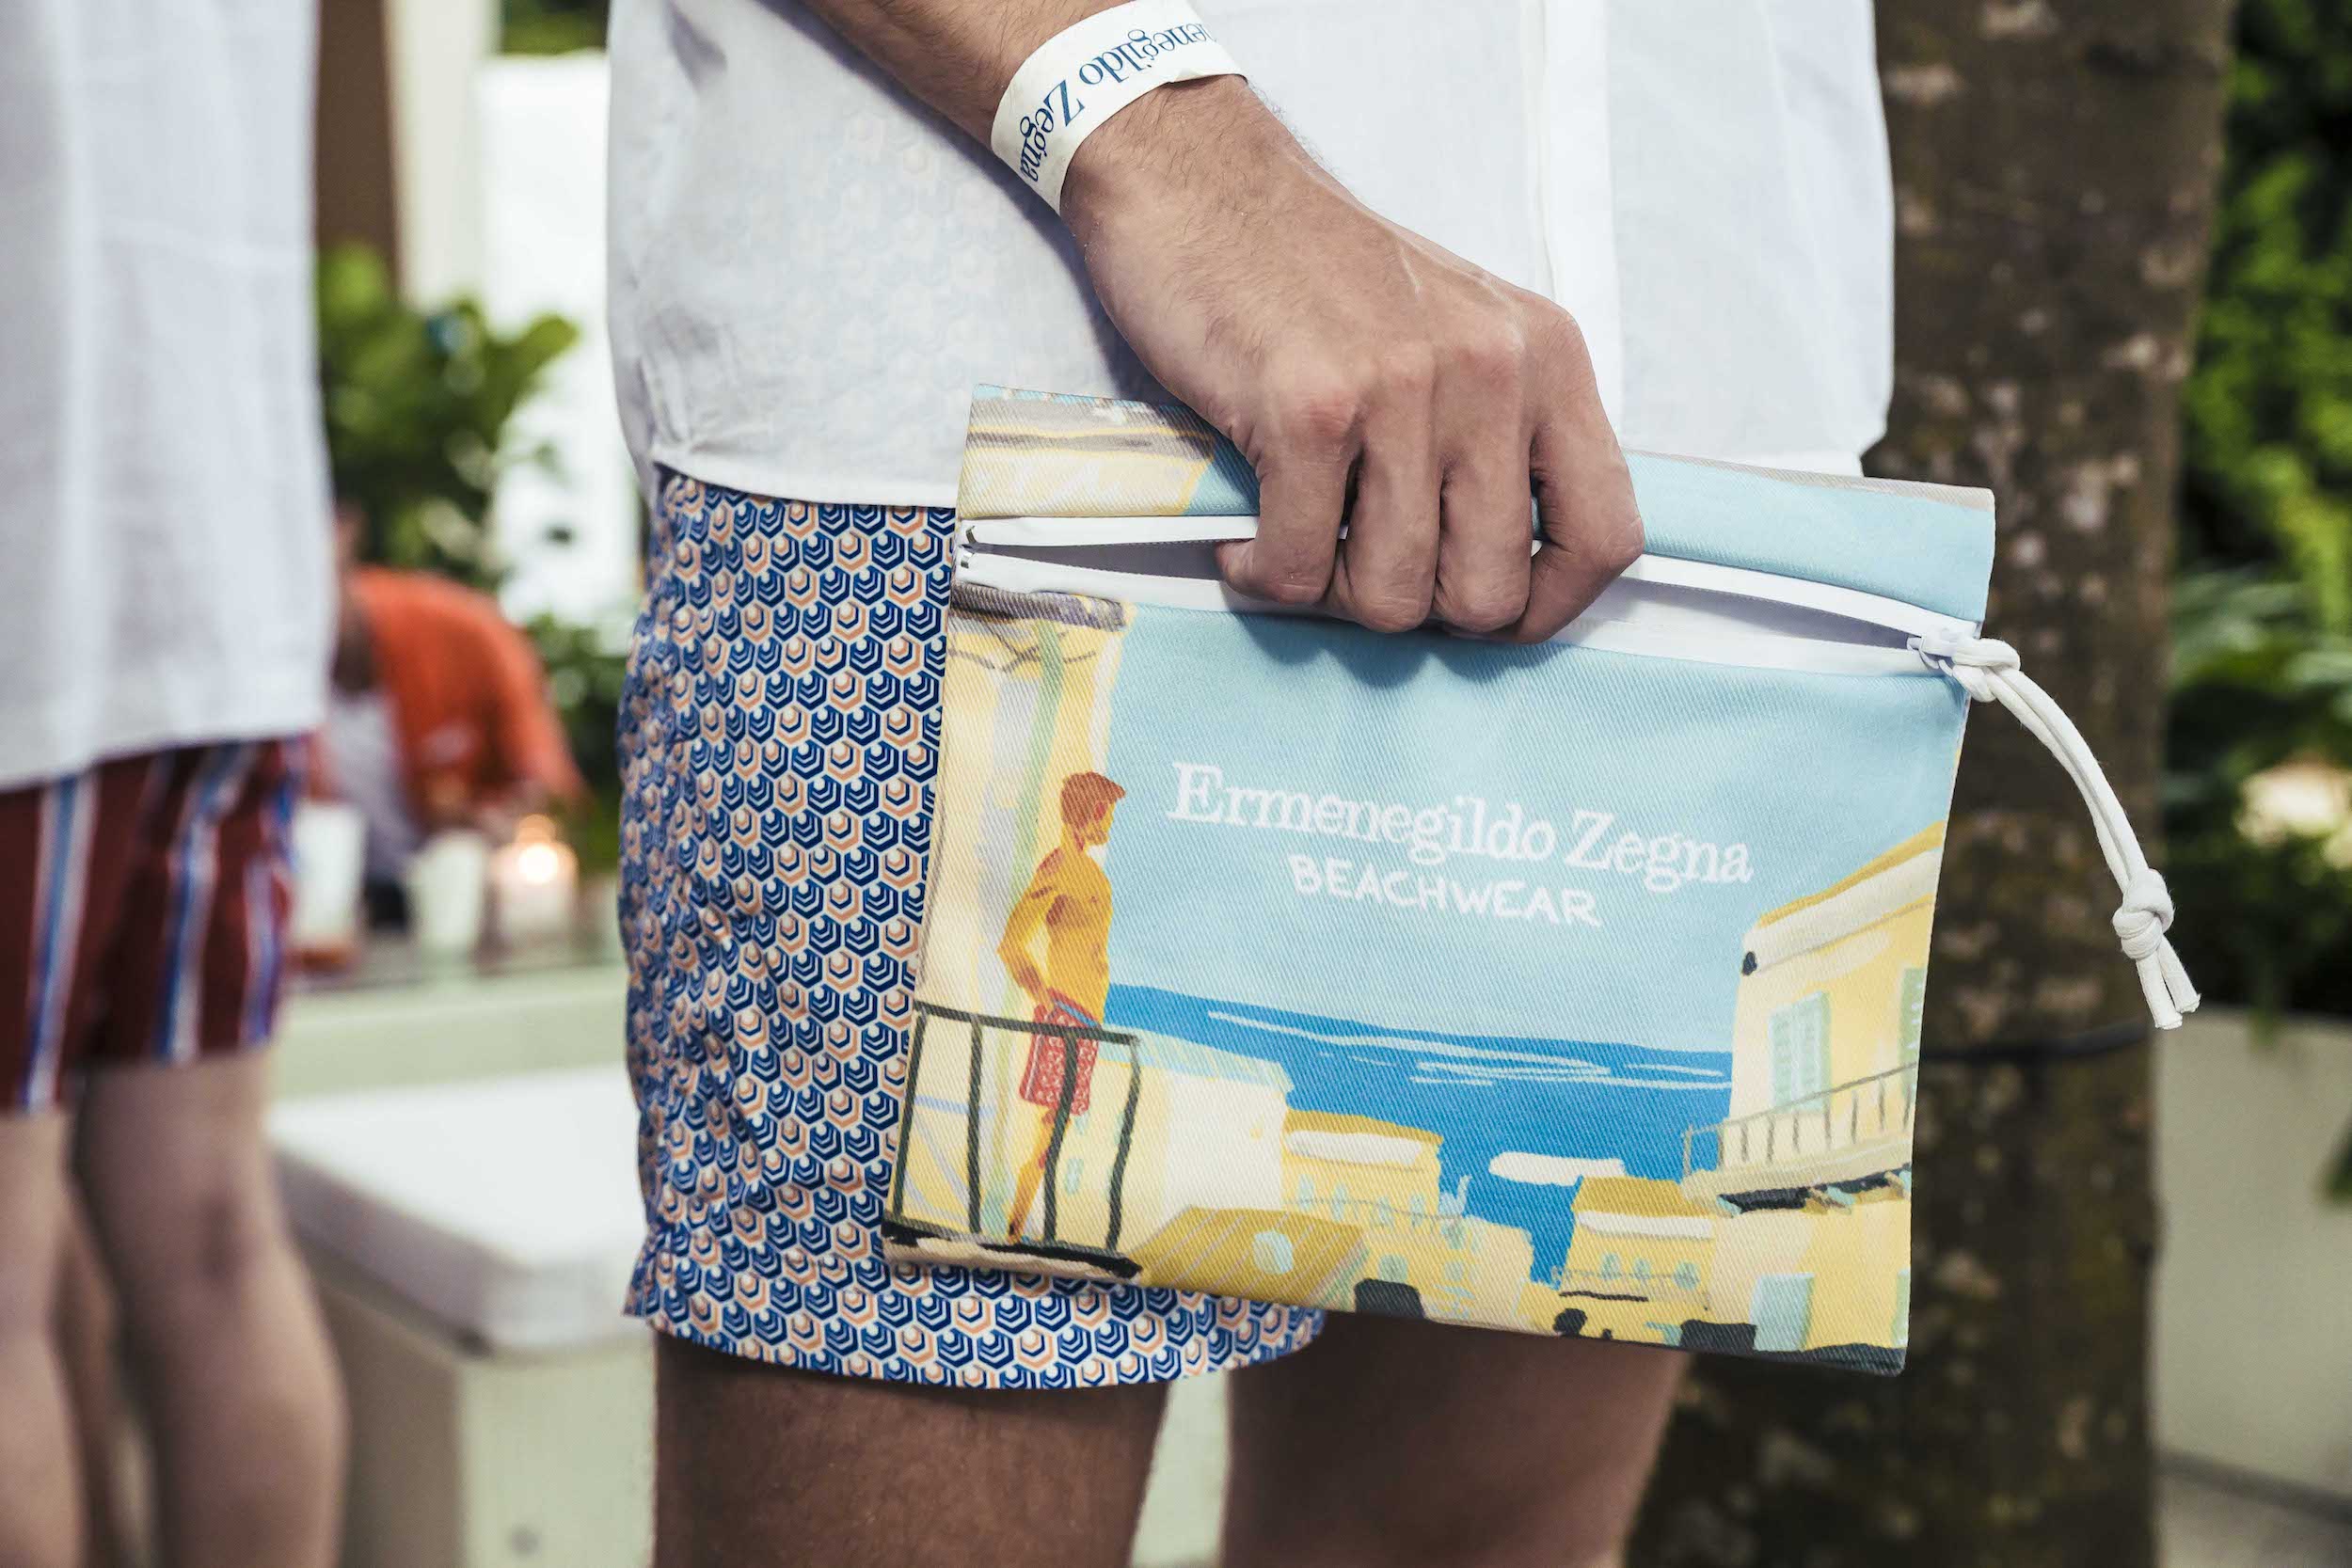 Ermenegildo Zegna launches first-ever beachwear collection this summer